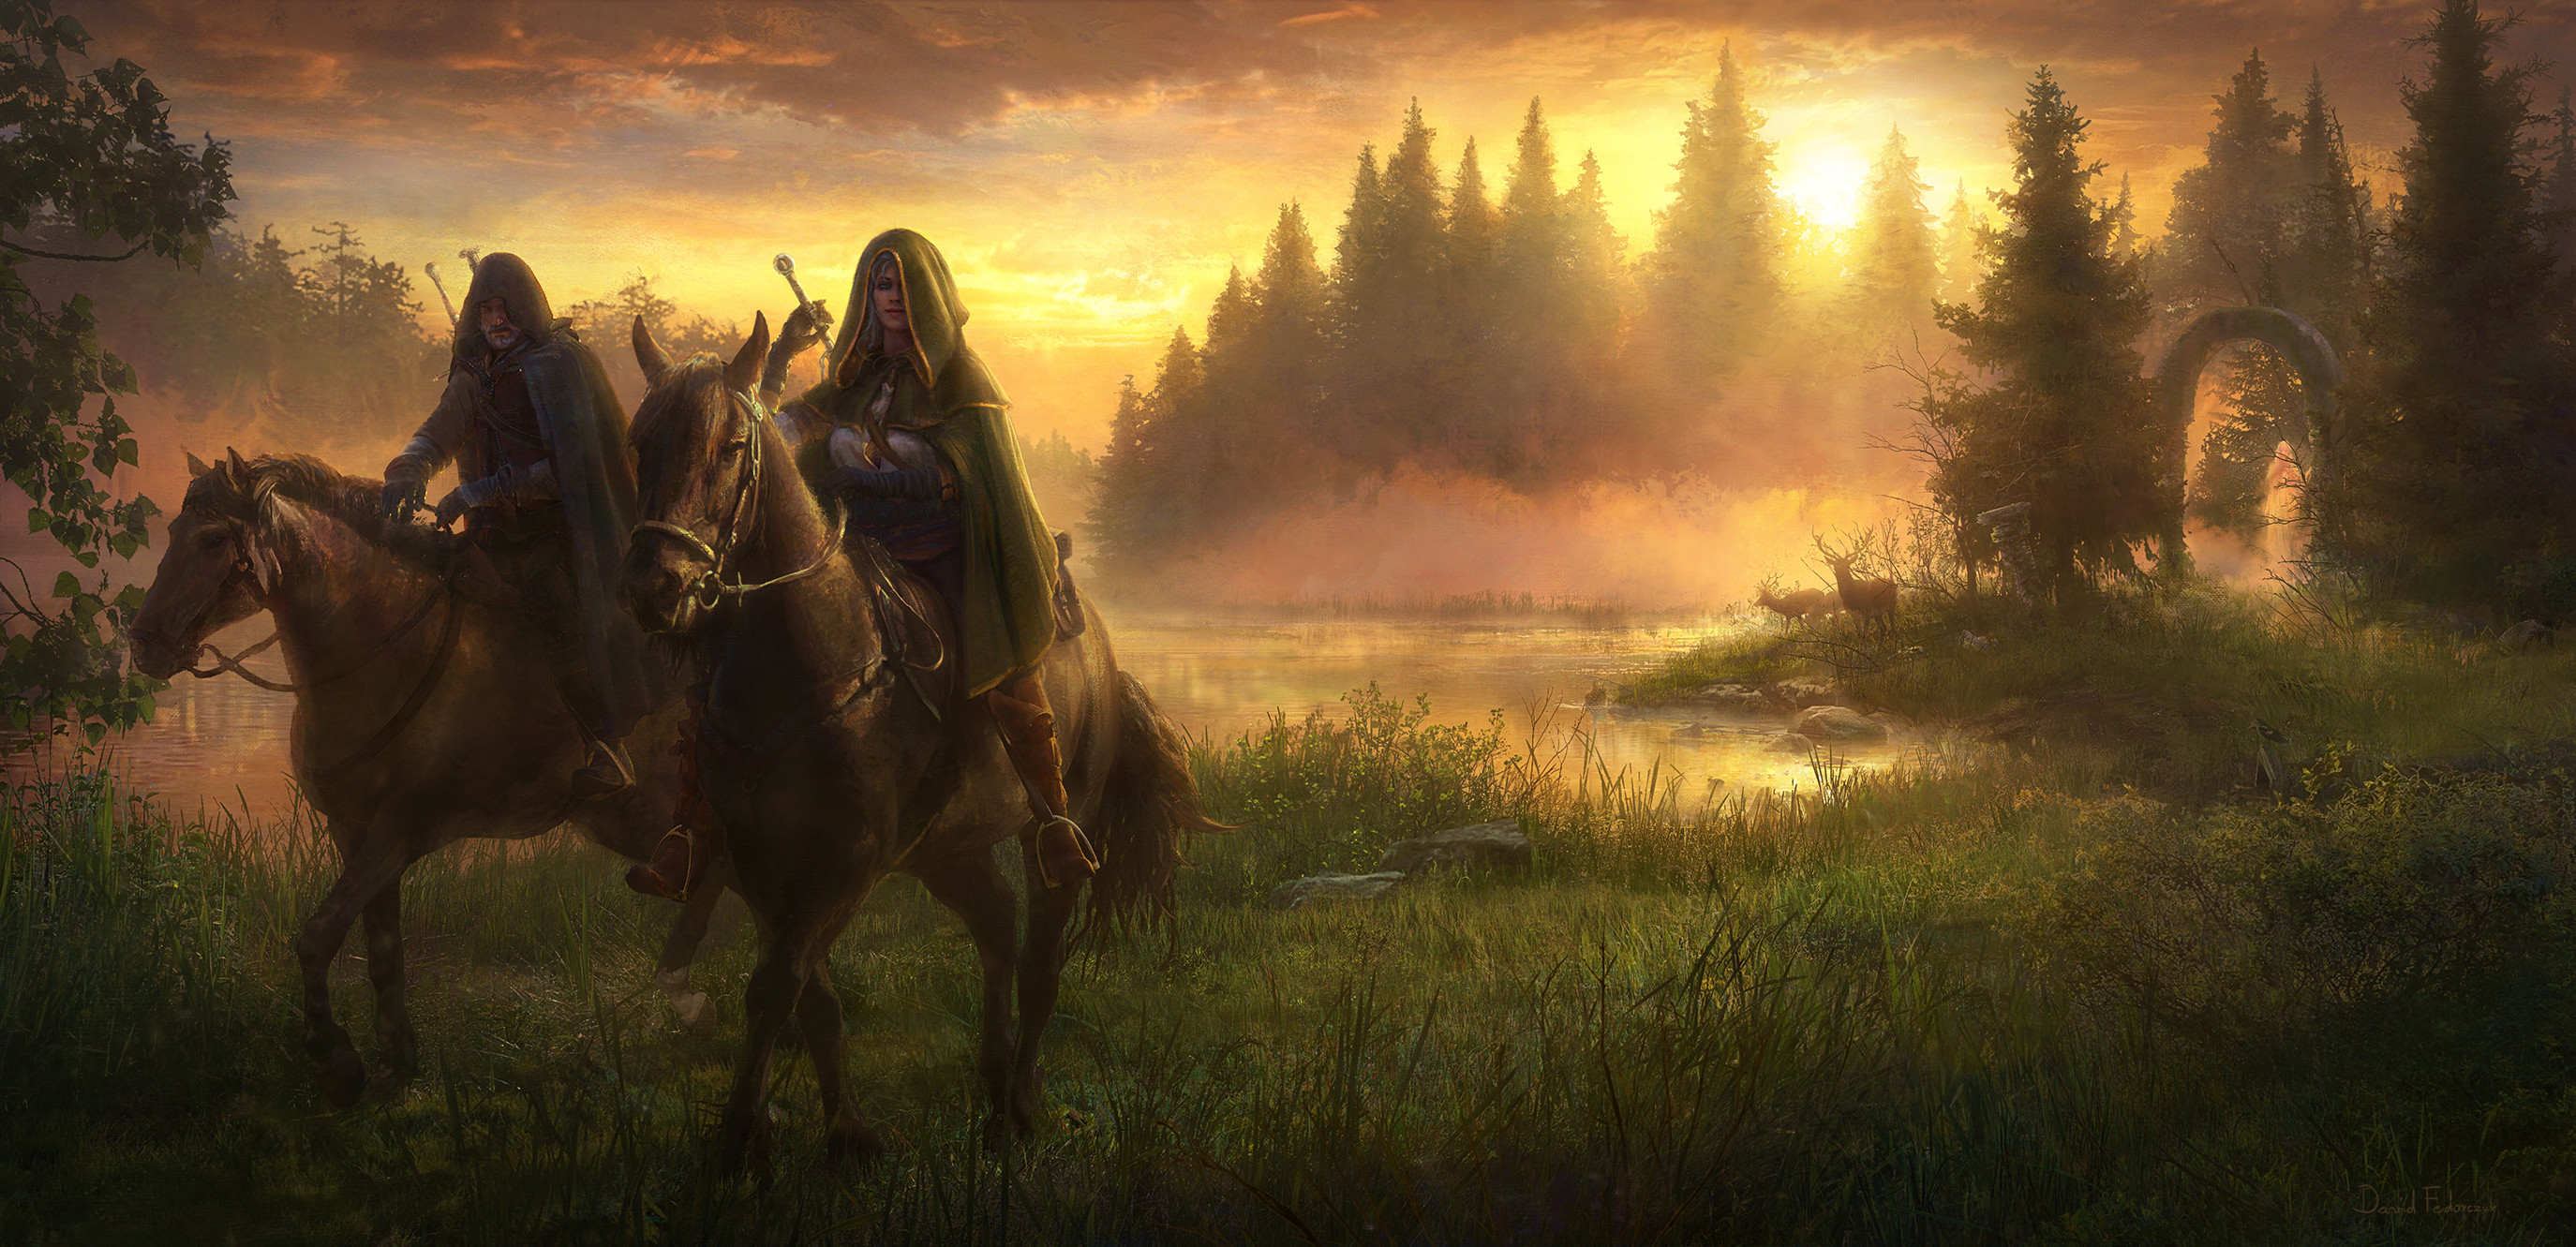 General 2749x1331 Cirilla Fiona Elen Riannon Geralt of Rivia The Witcher horse forest David Fedorczuk